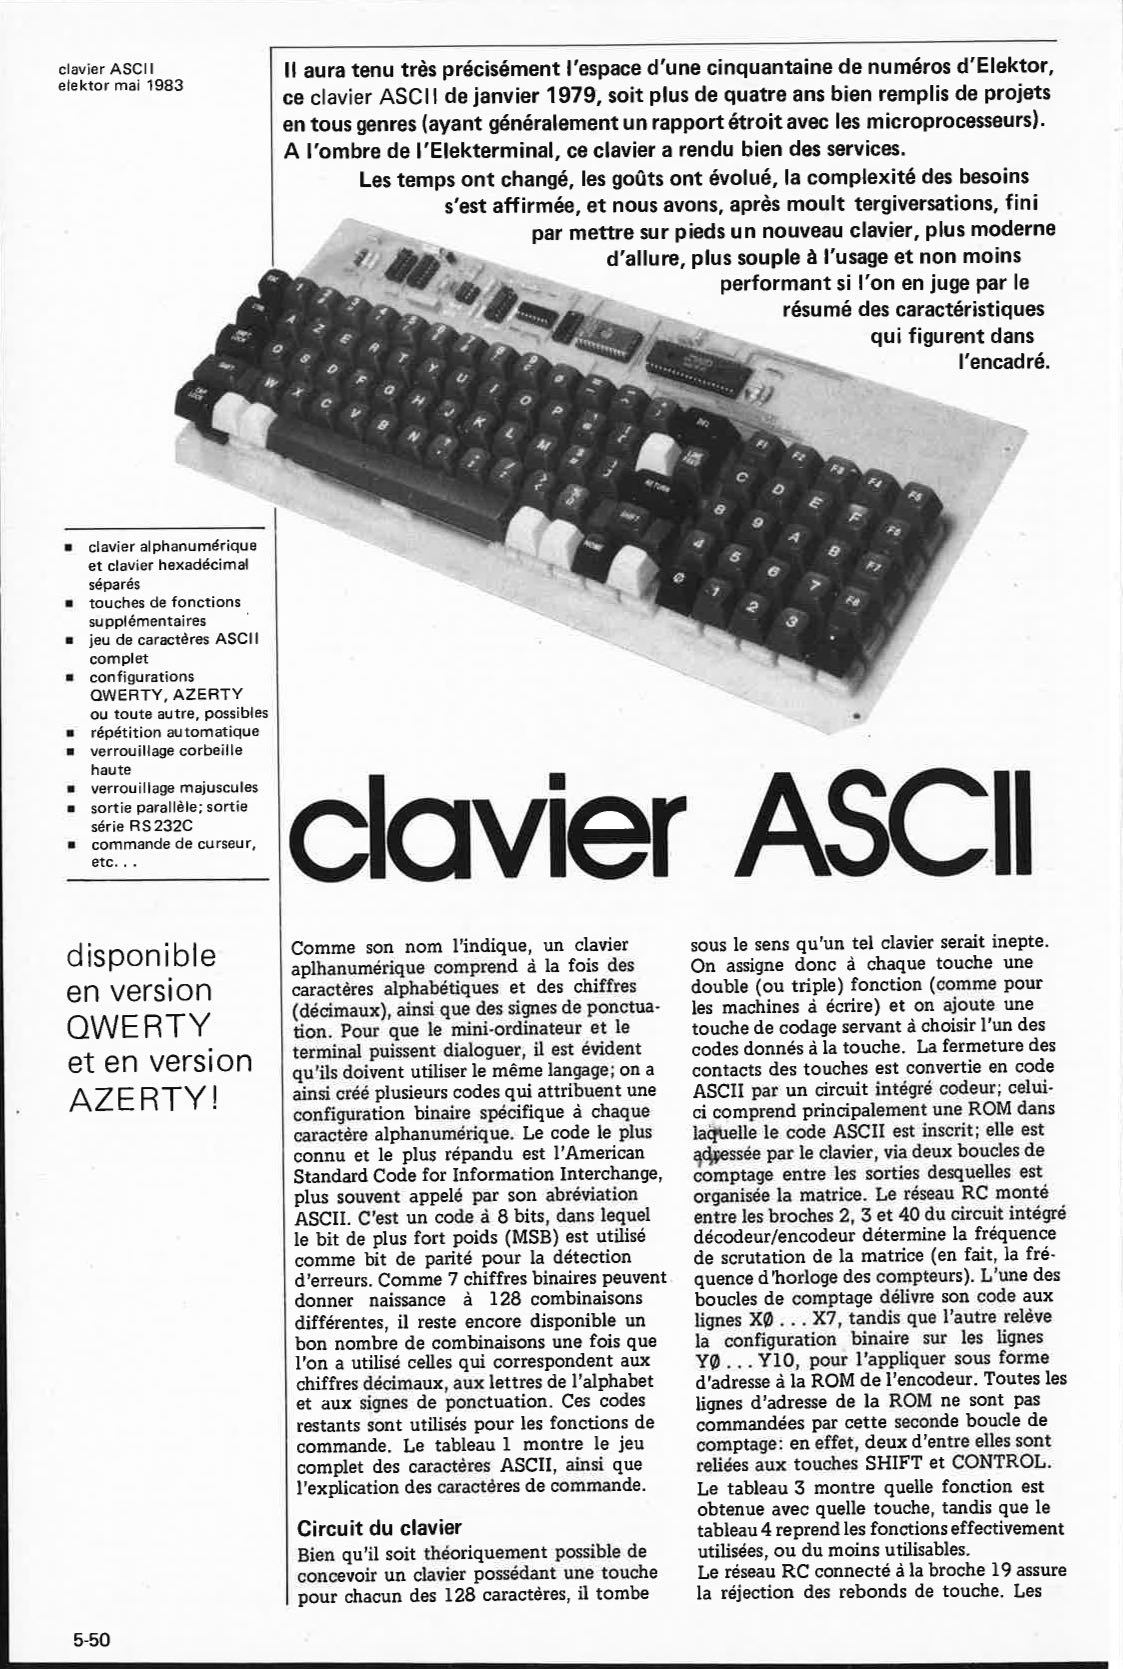 clavier ASCII